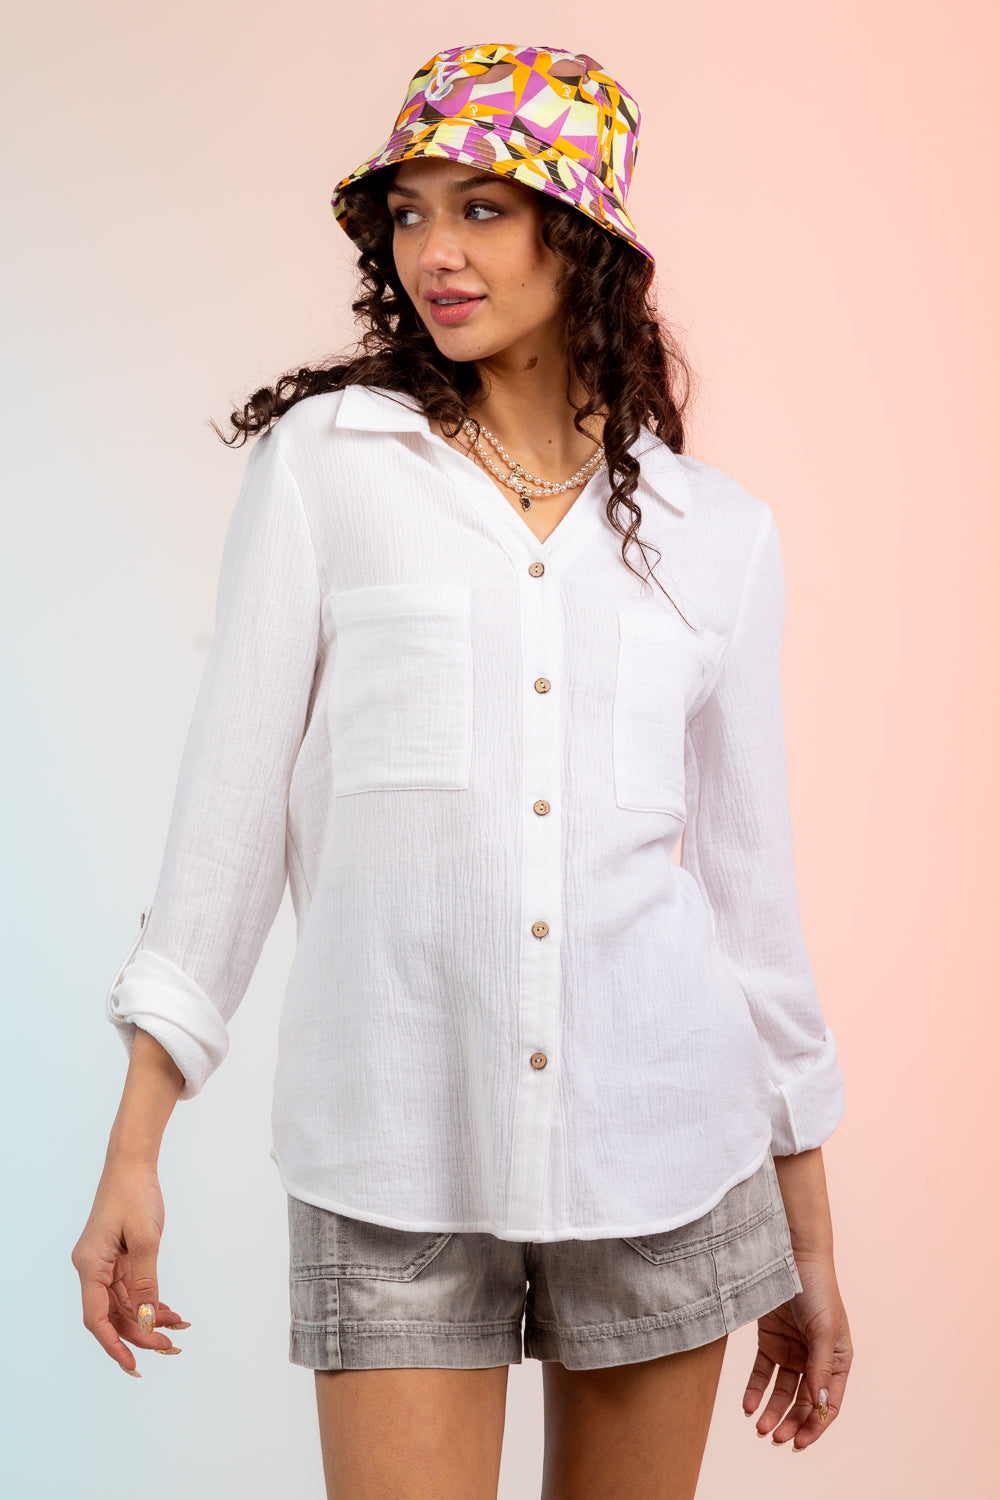 Double Sided Coconut Shirt Buttons Per Dozen — L'Etoffe Fabrics Online